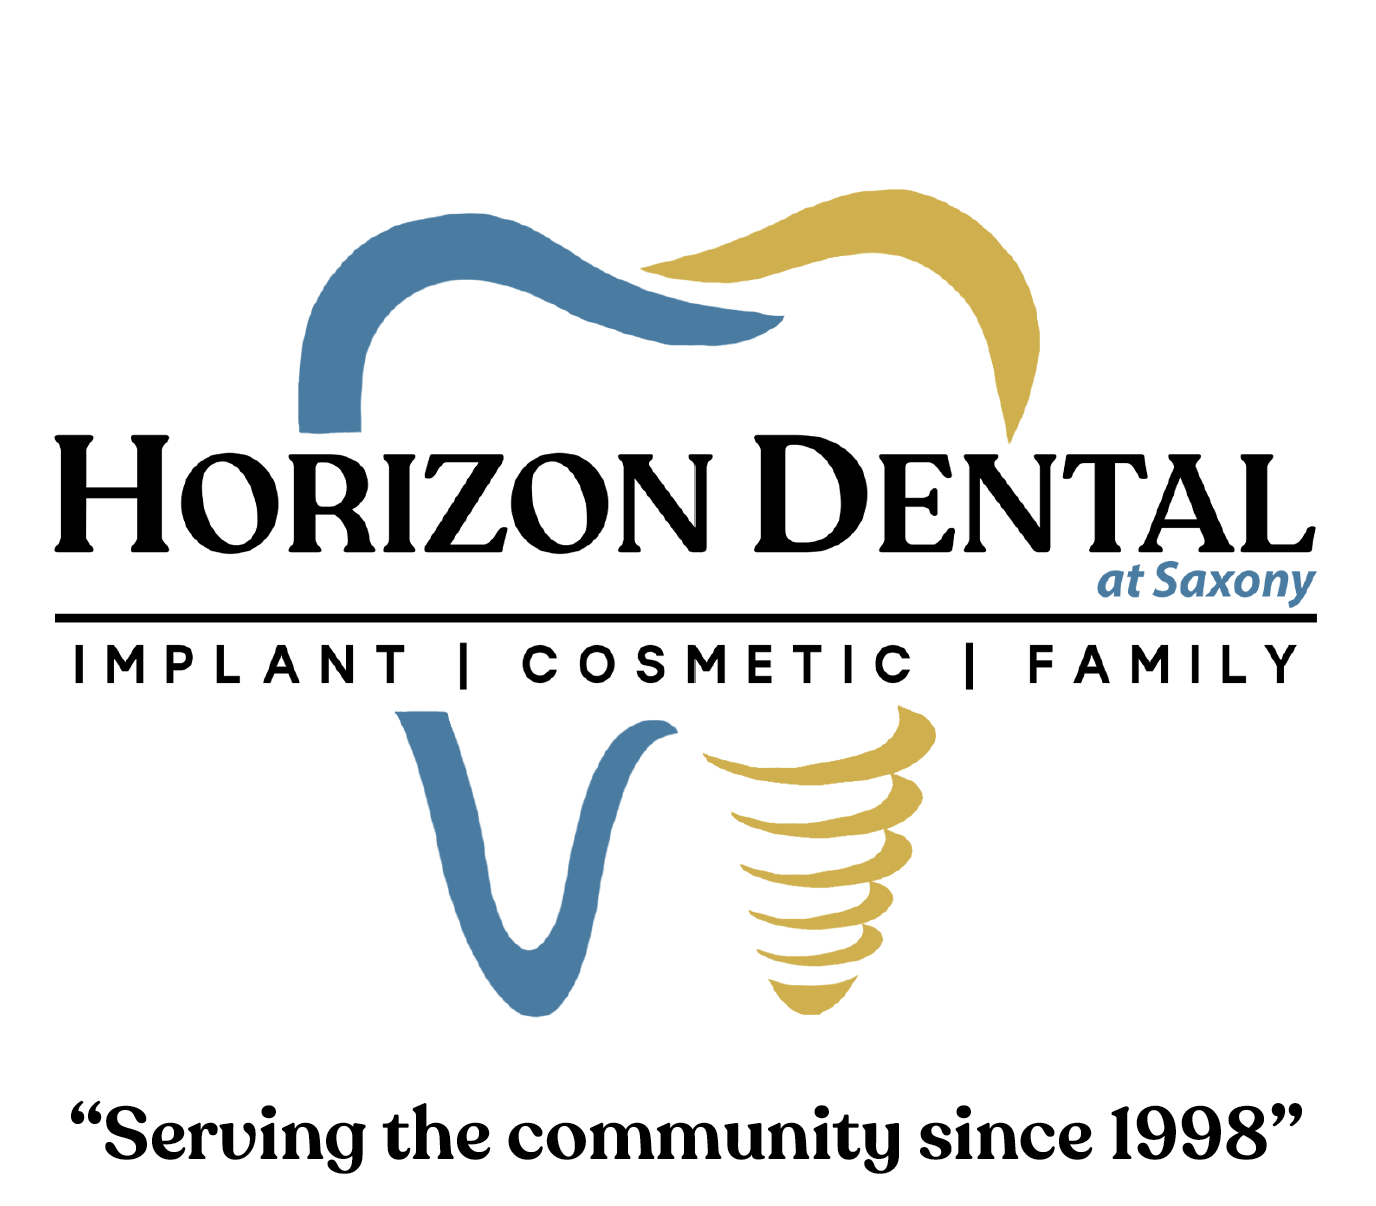 Horizon Dental at Saxony